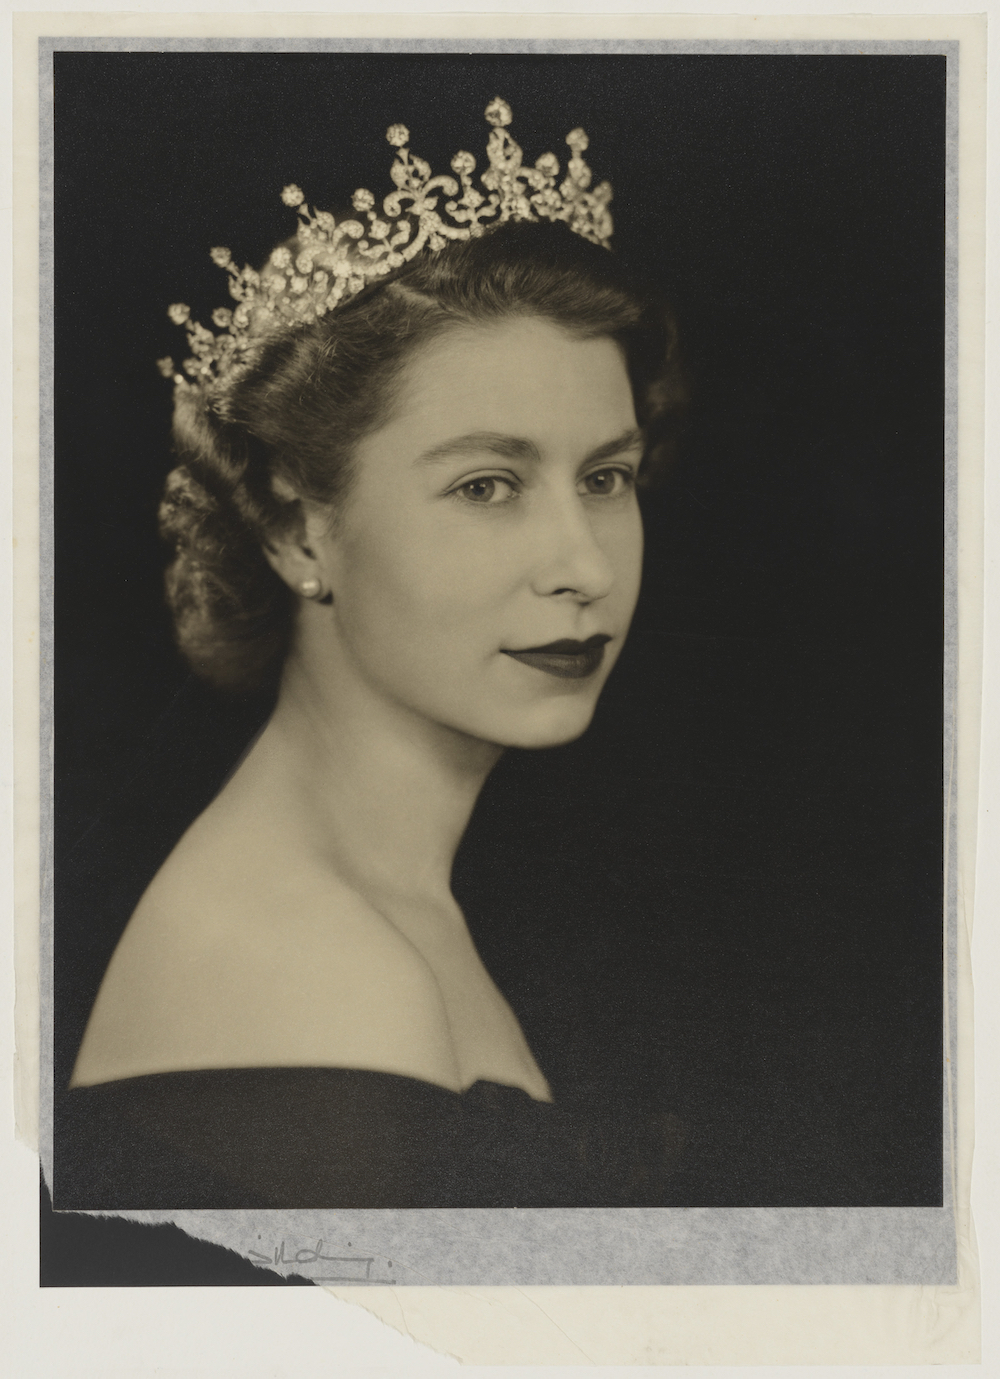 Queen Elizabeth II by Dorothy Wilding, 26 February 1952. © National Portrait Gallery, London